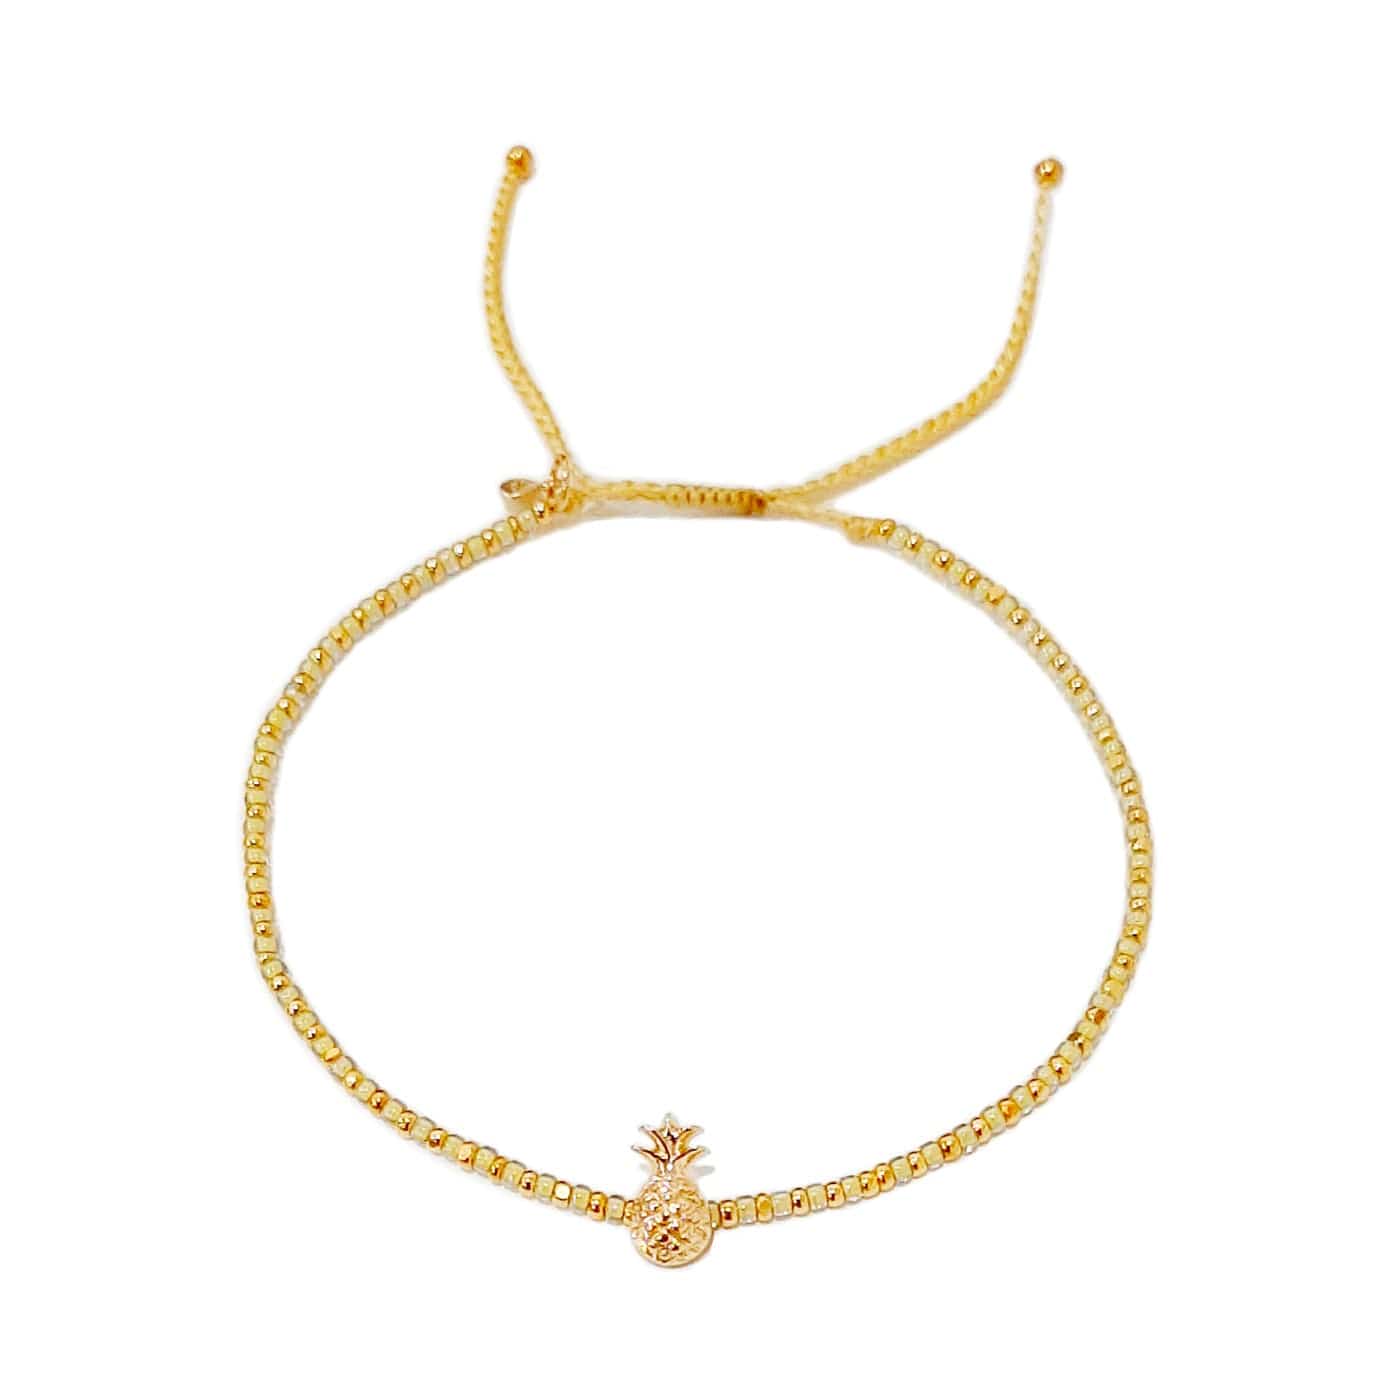 TAI JEWELRY Bracelet Handmade Bracelet With Pineapple Charm